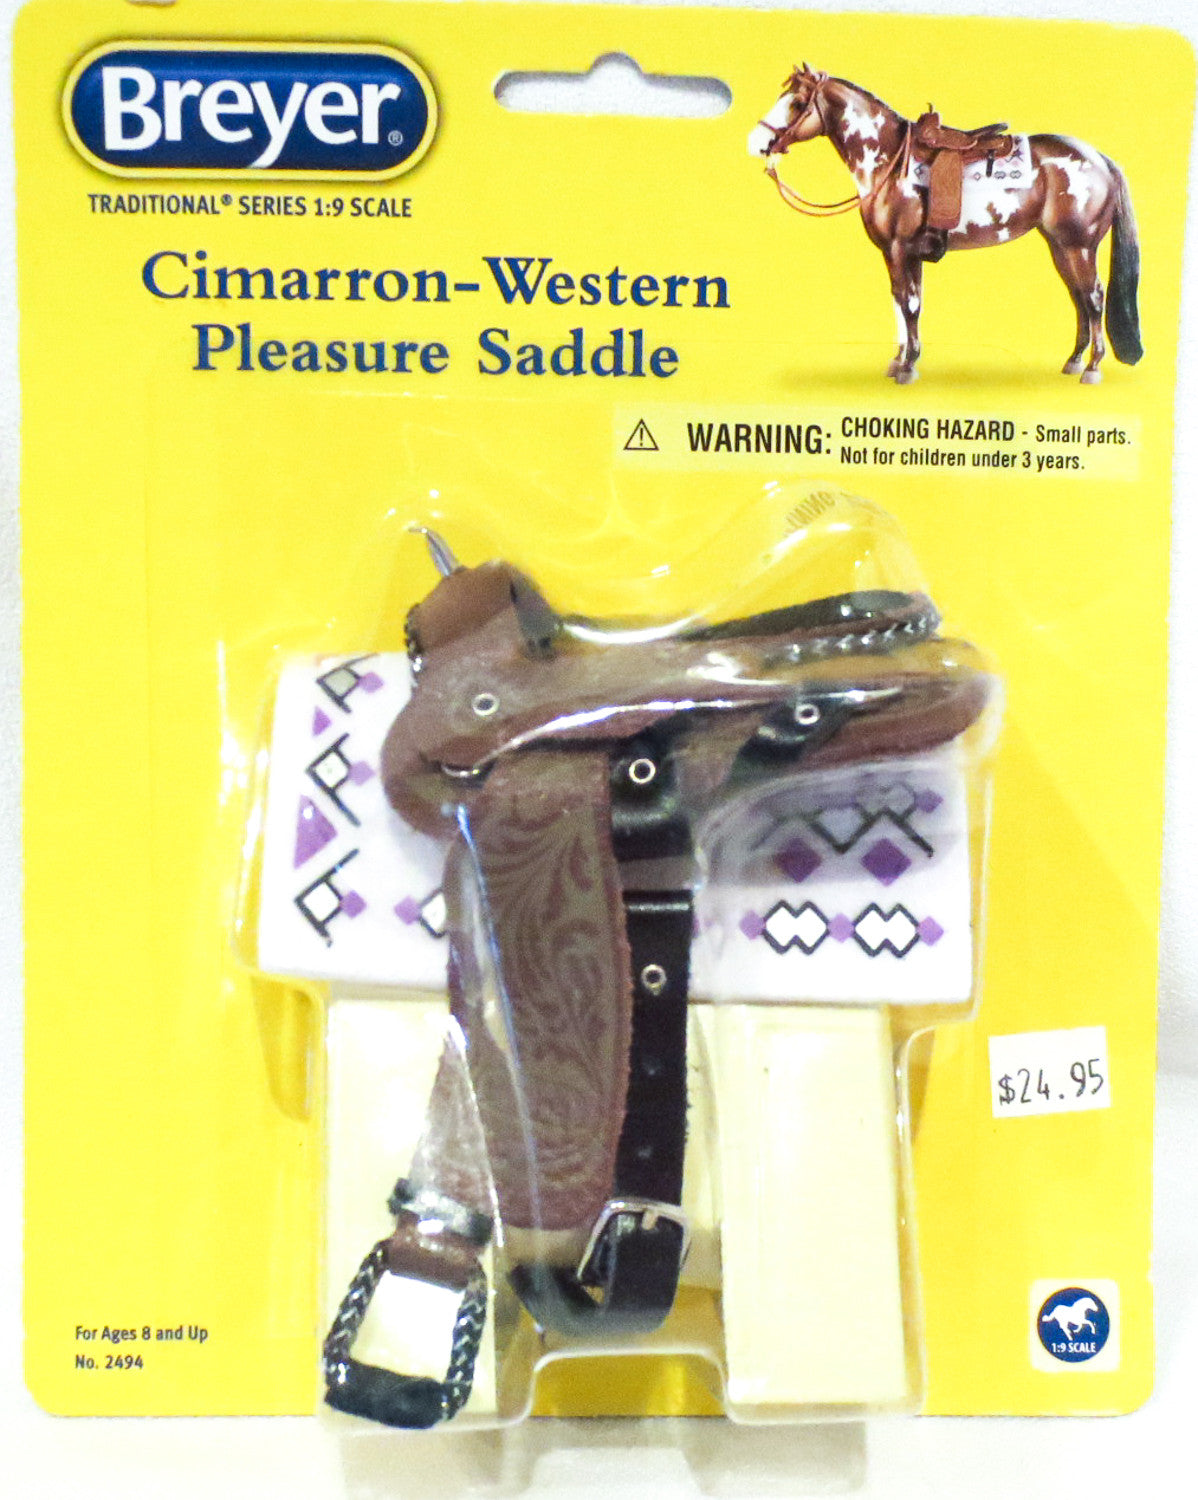 Cimarron Western Pleasure Saddle - triple-mountain